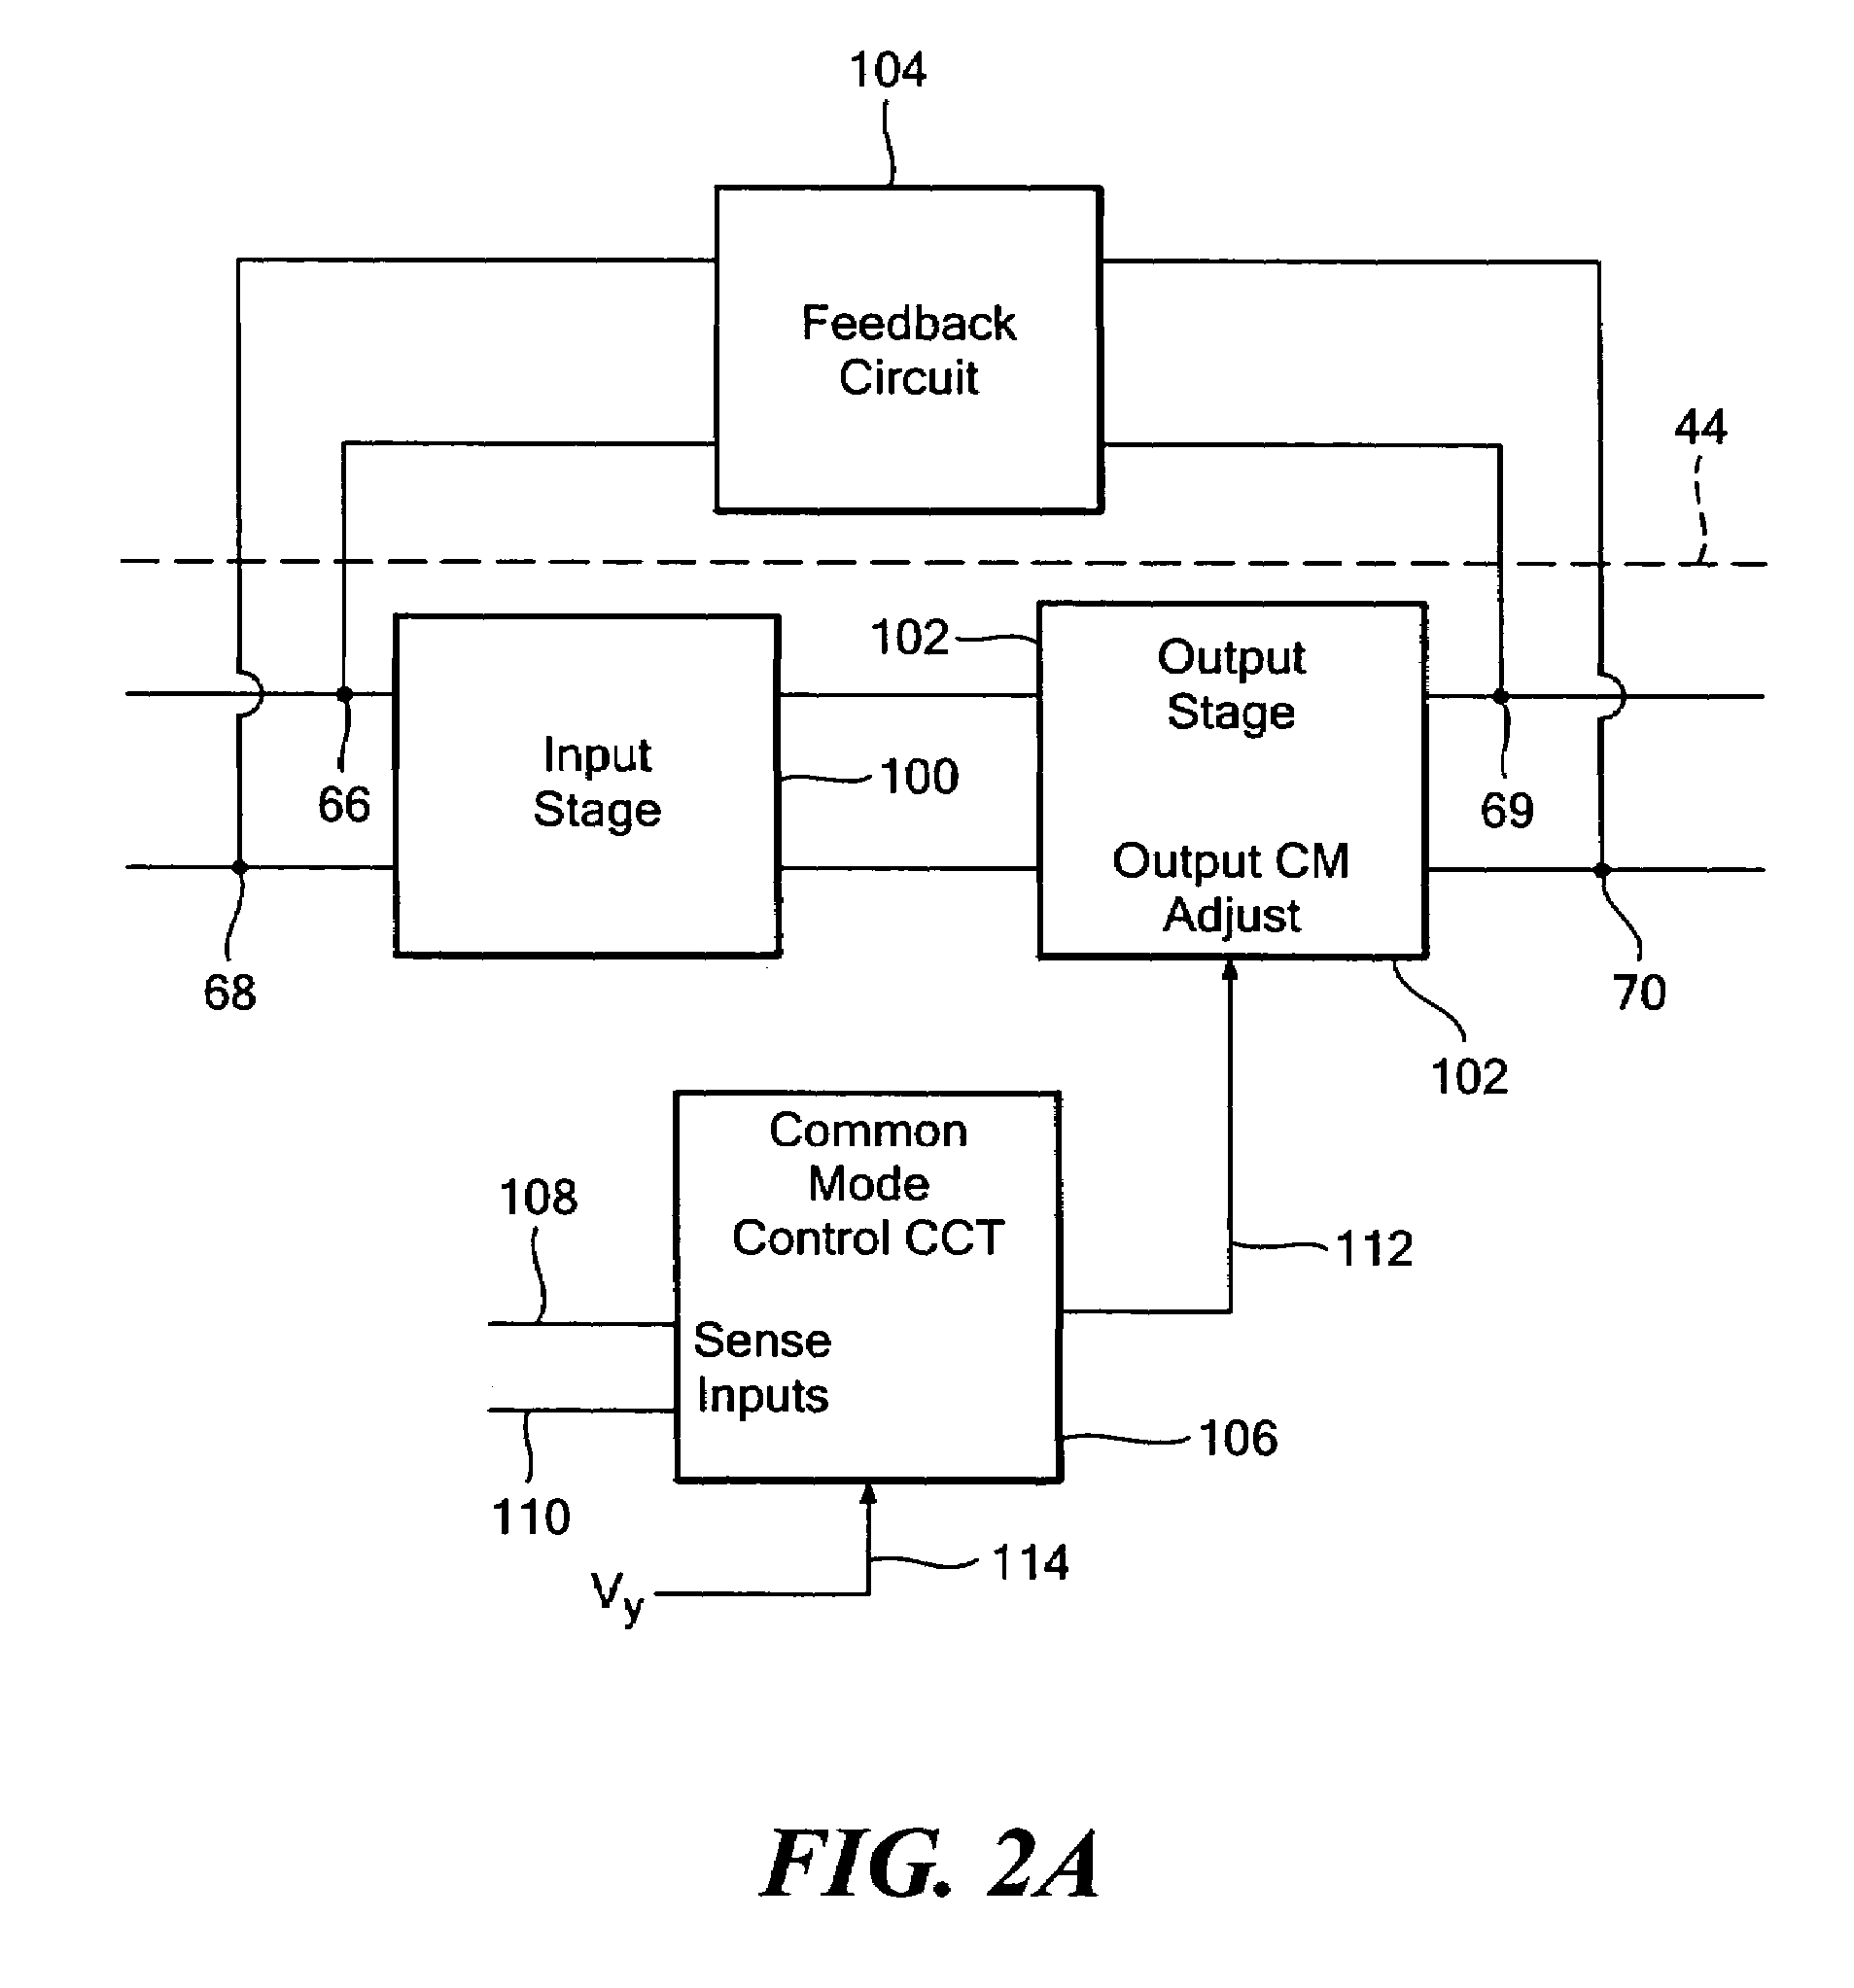 One terminal capacitor interface circuit